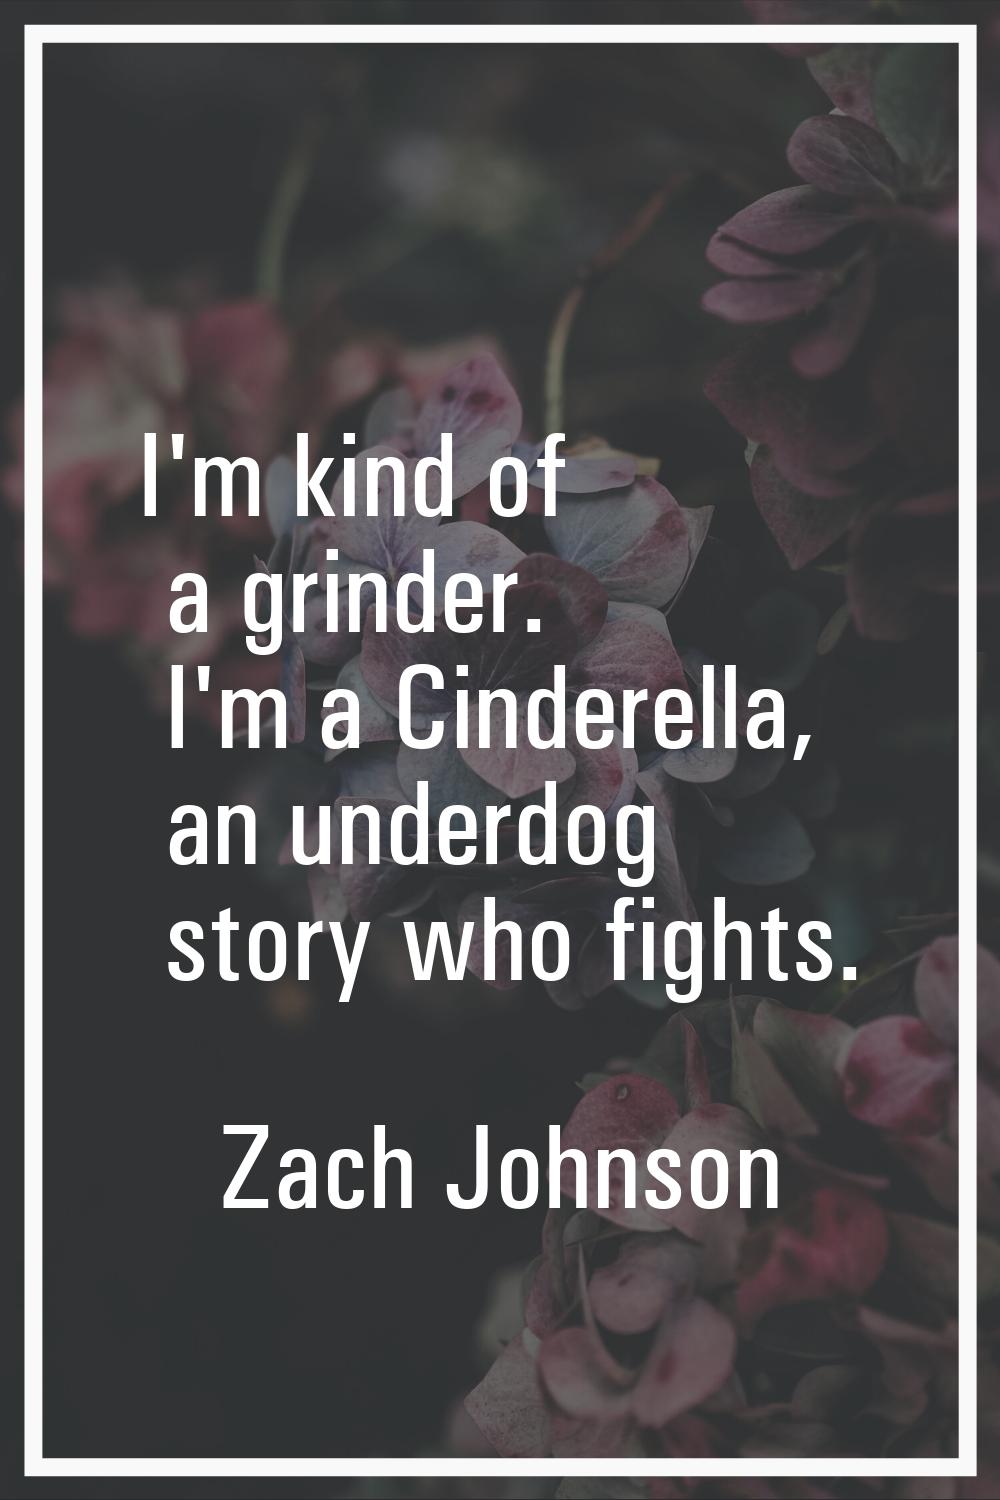 I'm kind of a grinder. I'm a Cinderella, an underdog story who fights.